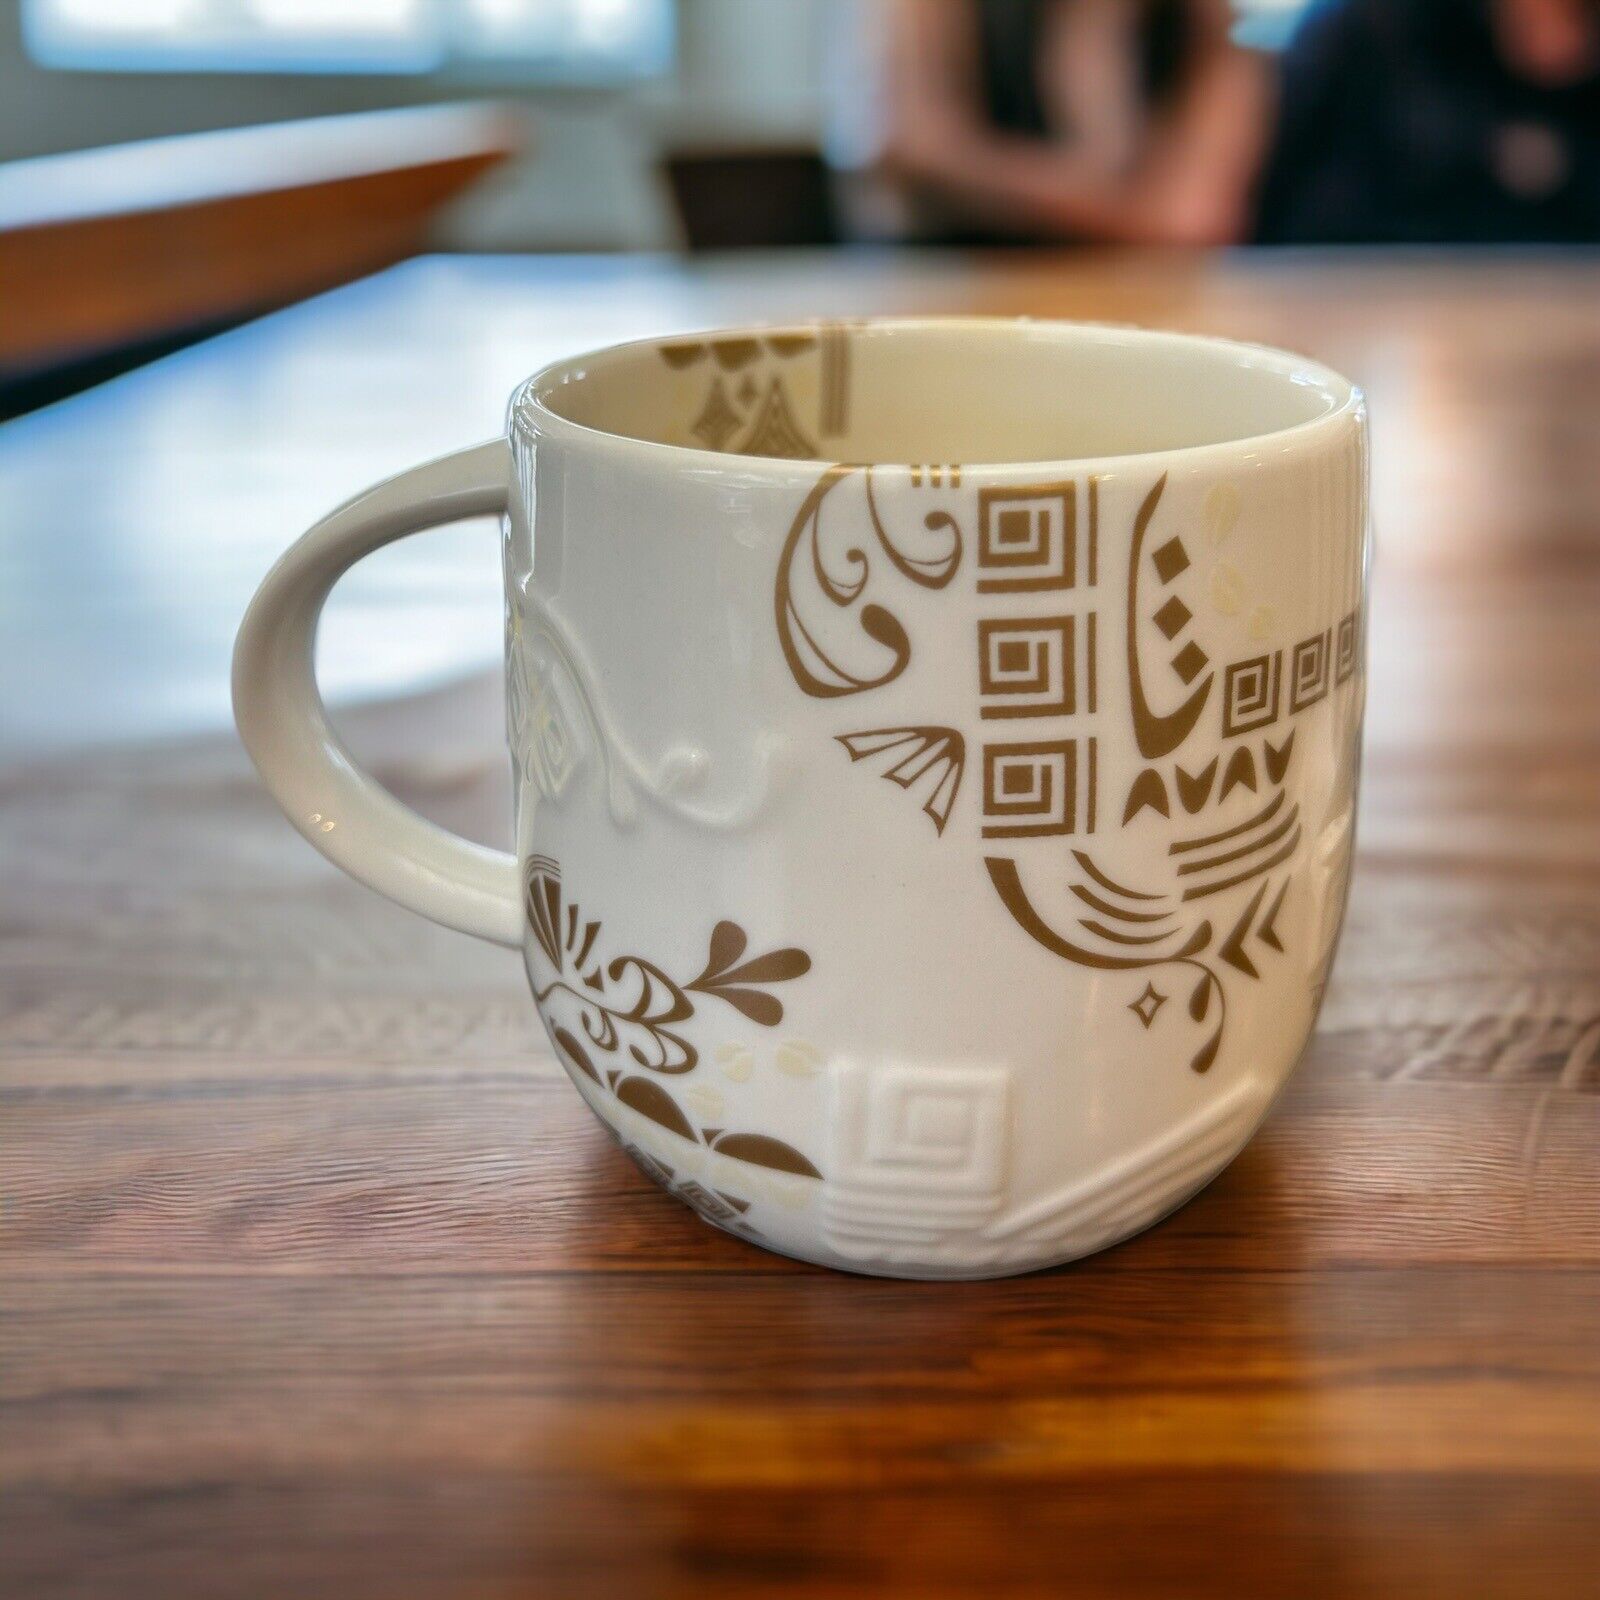 Retired 2012 Starbucks Coffee Mug Asian Theme White Gold Cup Bone China 12 oz